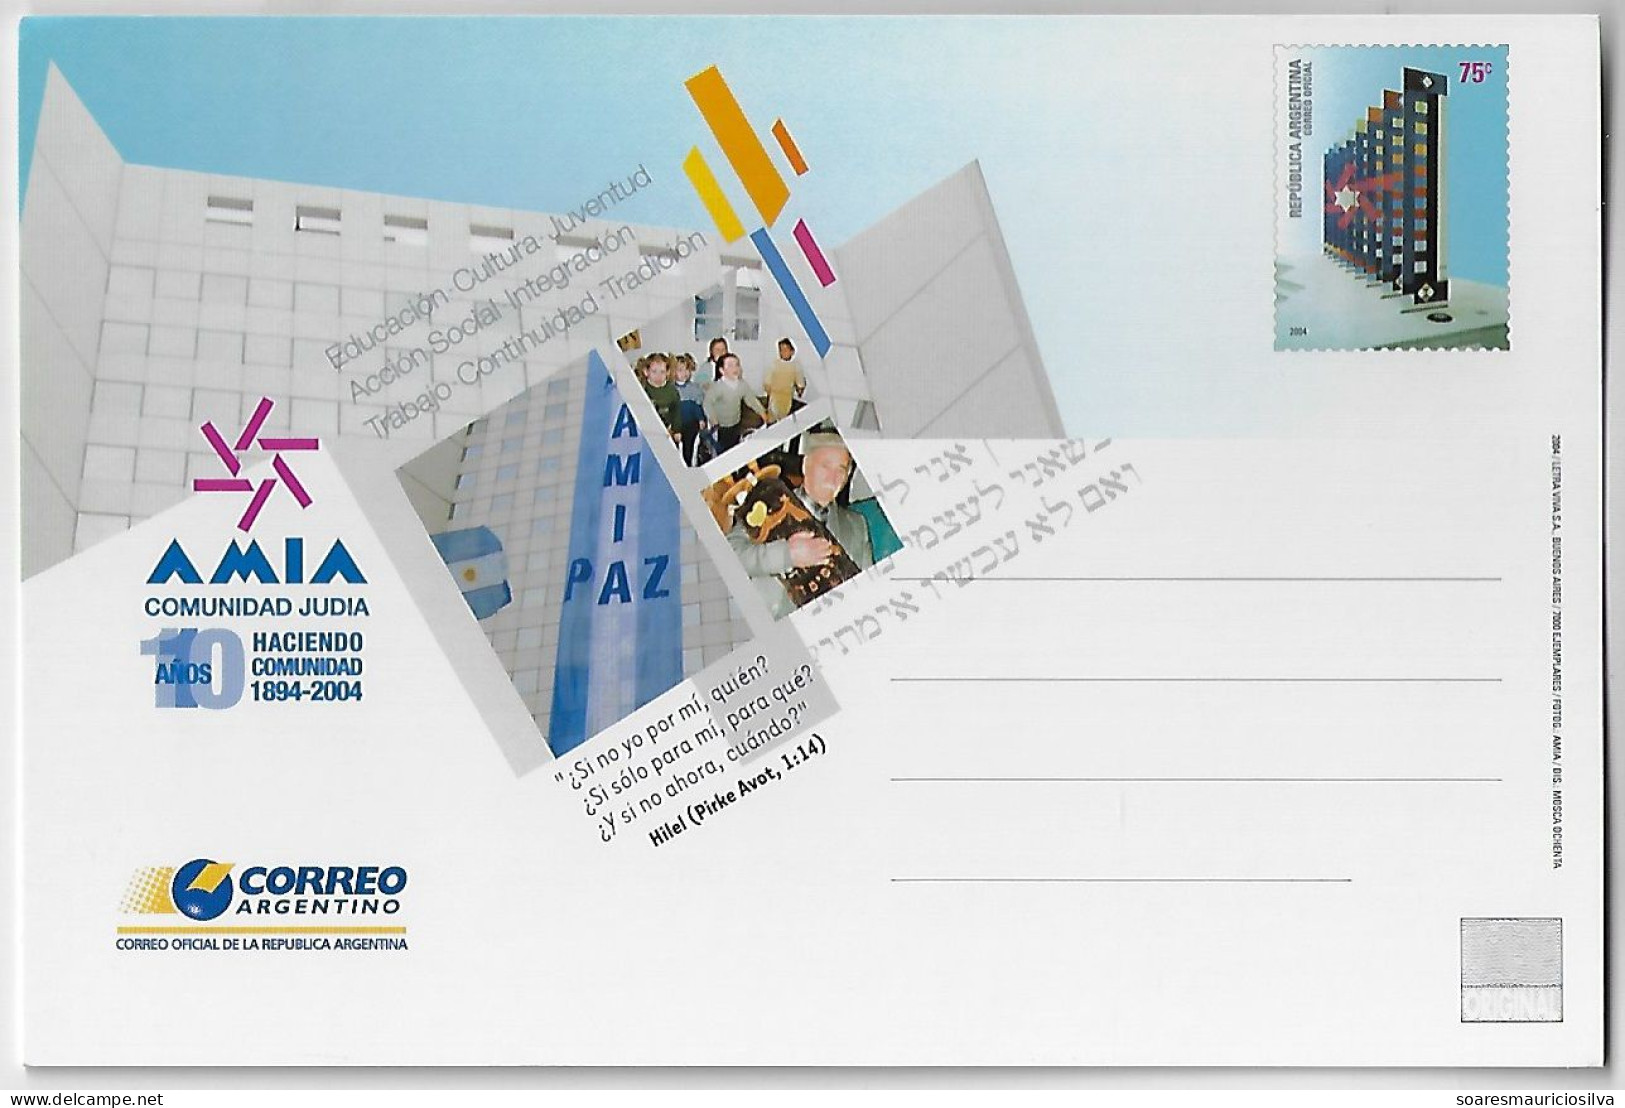 Argentina 2004 Postal Stationery Card AMIA Argentine Israeli Mutual Association Jewish Community Unused - Ganzsachen